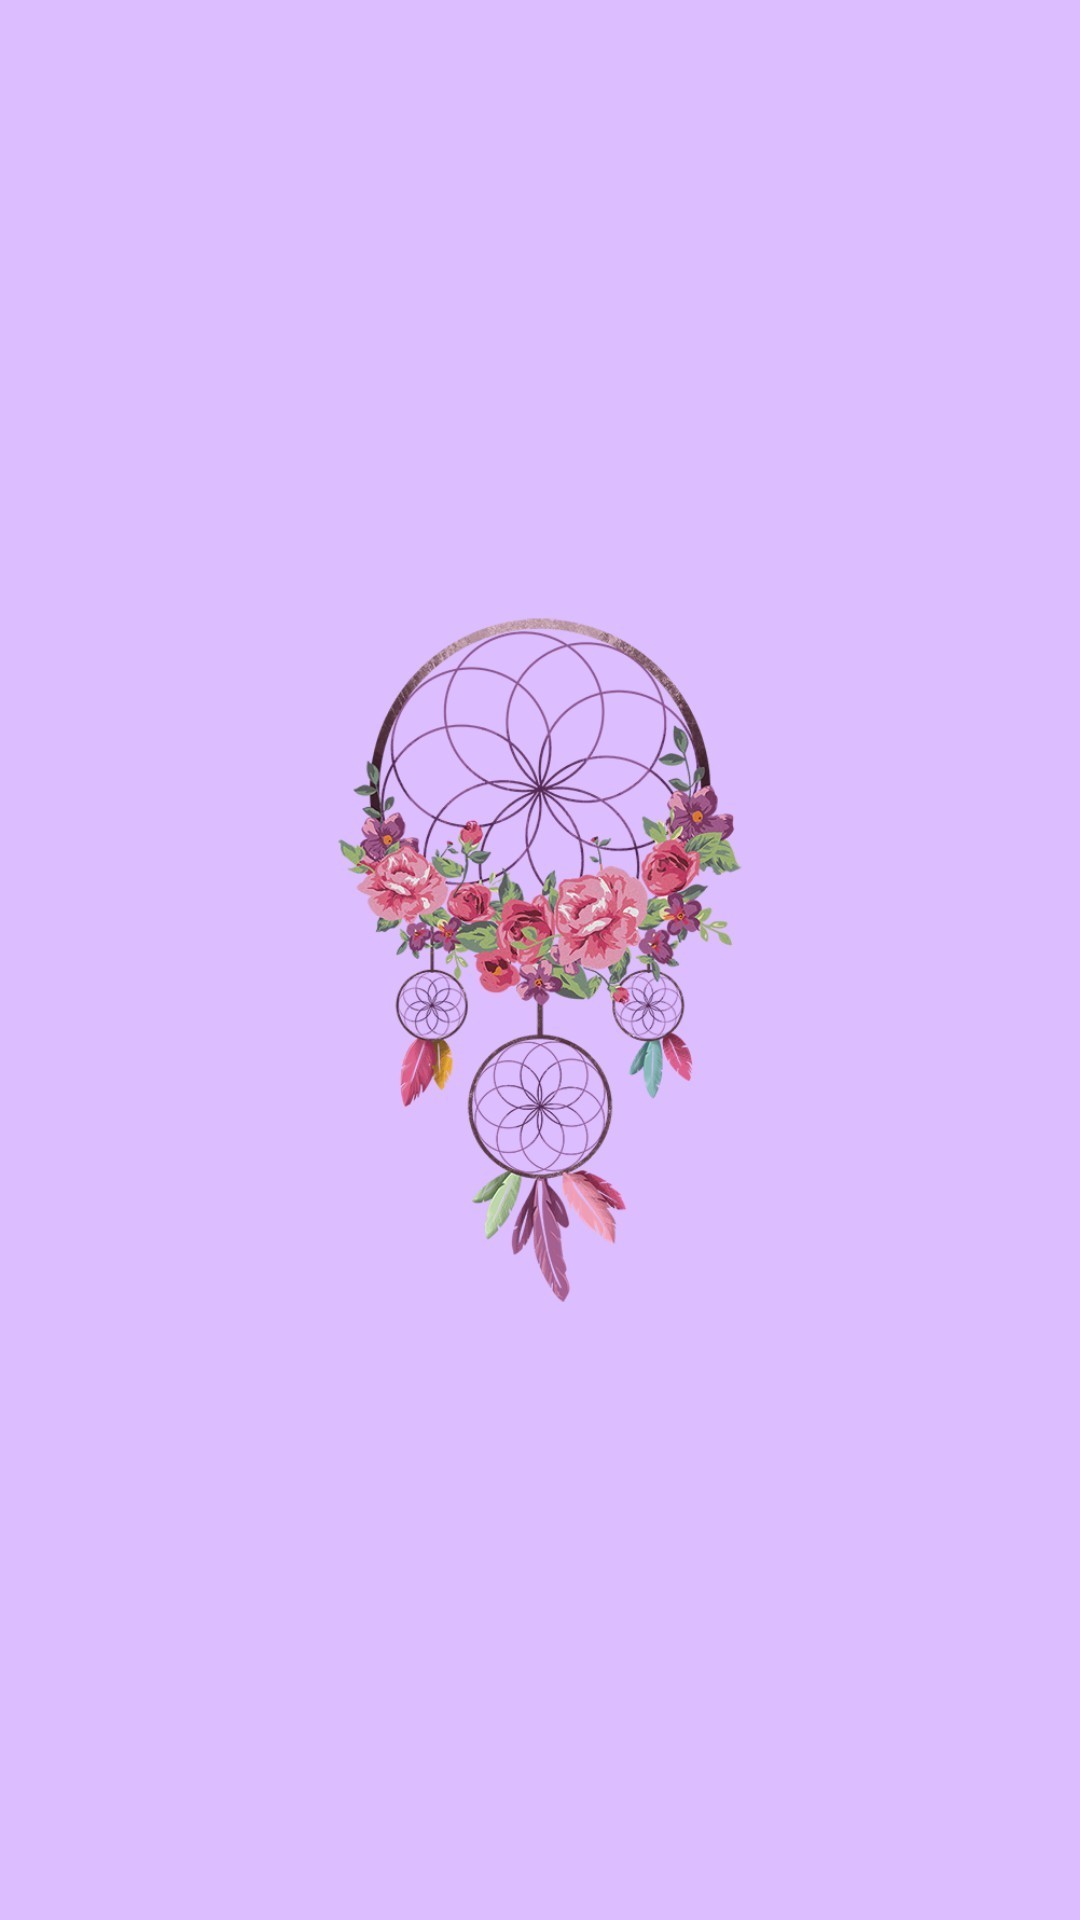 dreamcatcher wallpaper tumblr,produkt,rosa,violett,lila,illustration